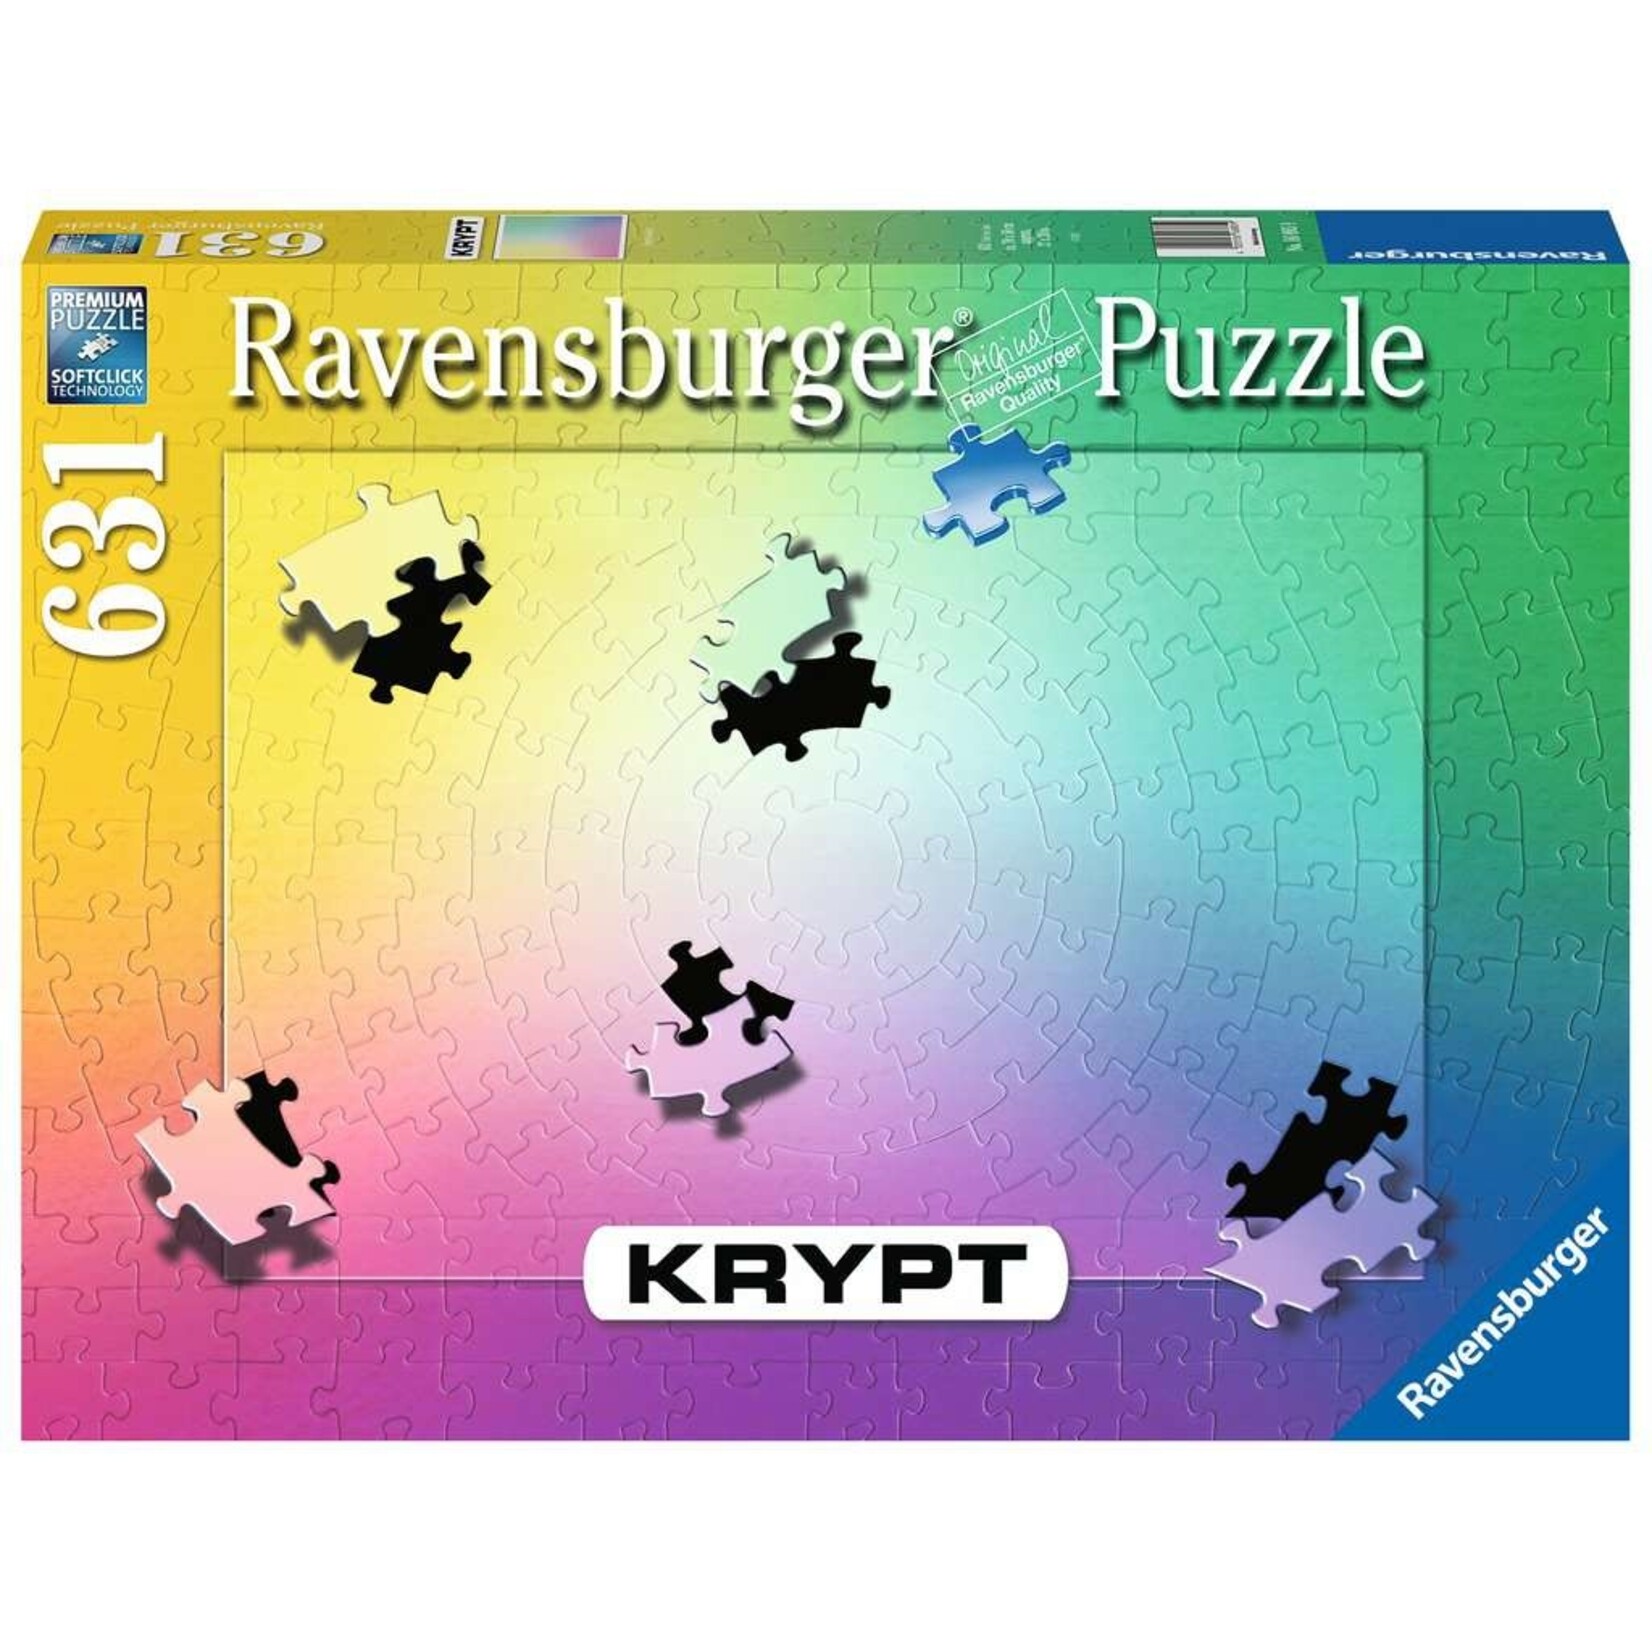 Ravensburger Ravensburger puzzel Krypt - Gradient (631 stukjes)